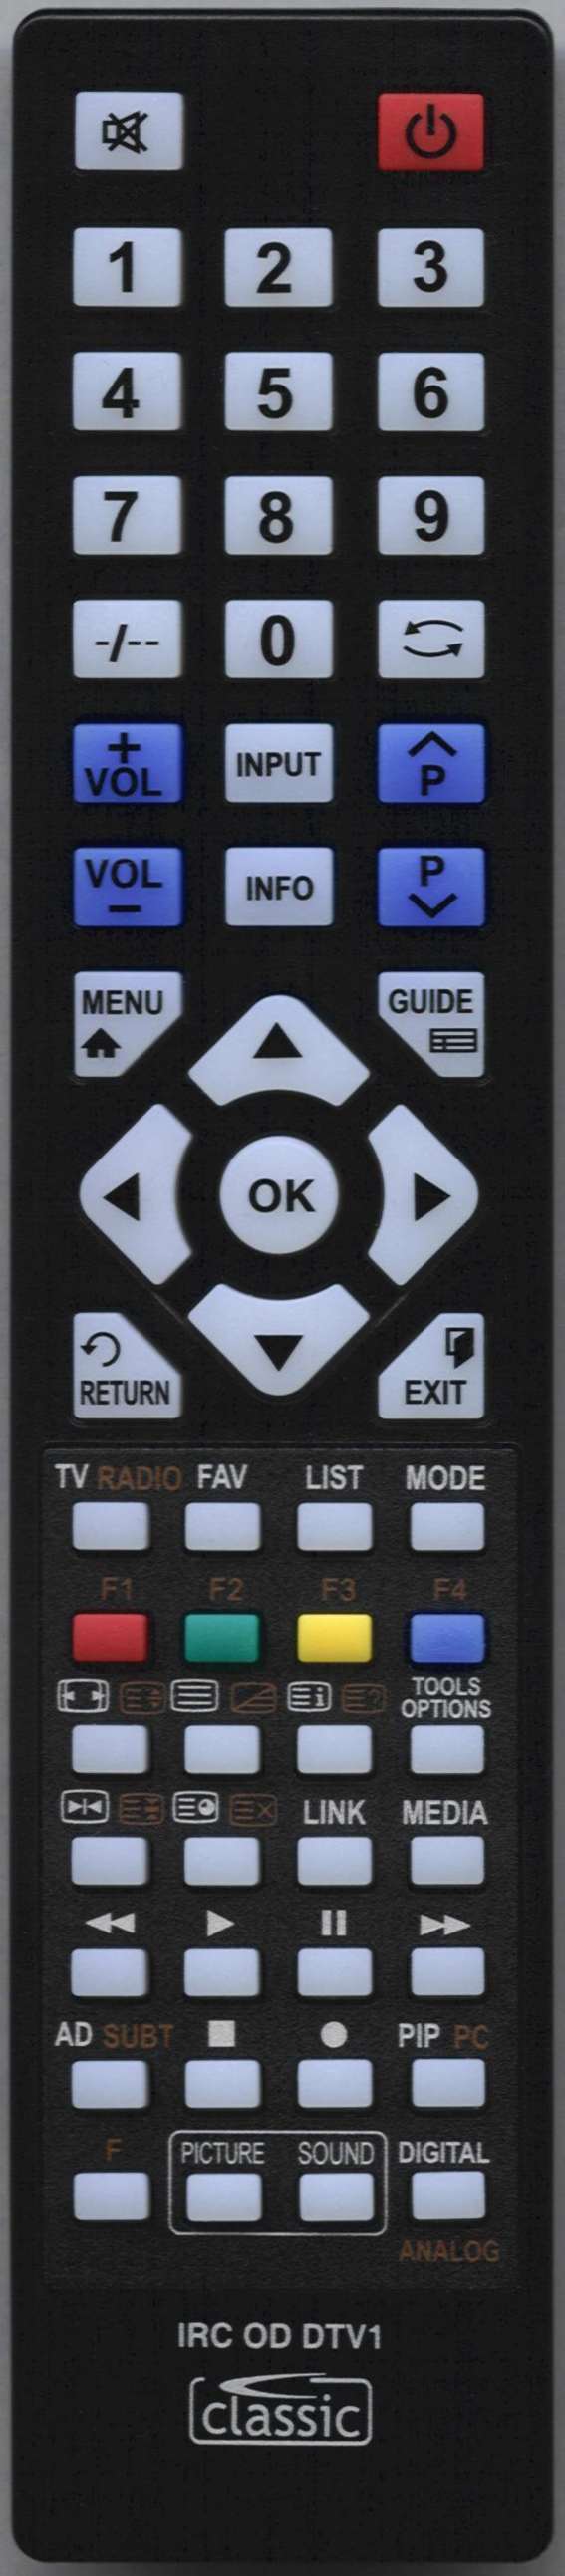 DIGITREX CFD1571 Remote Control